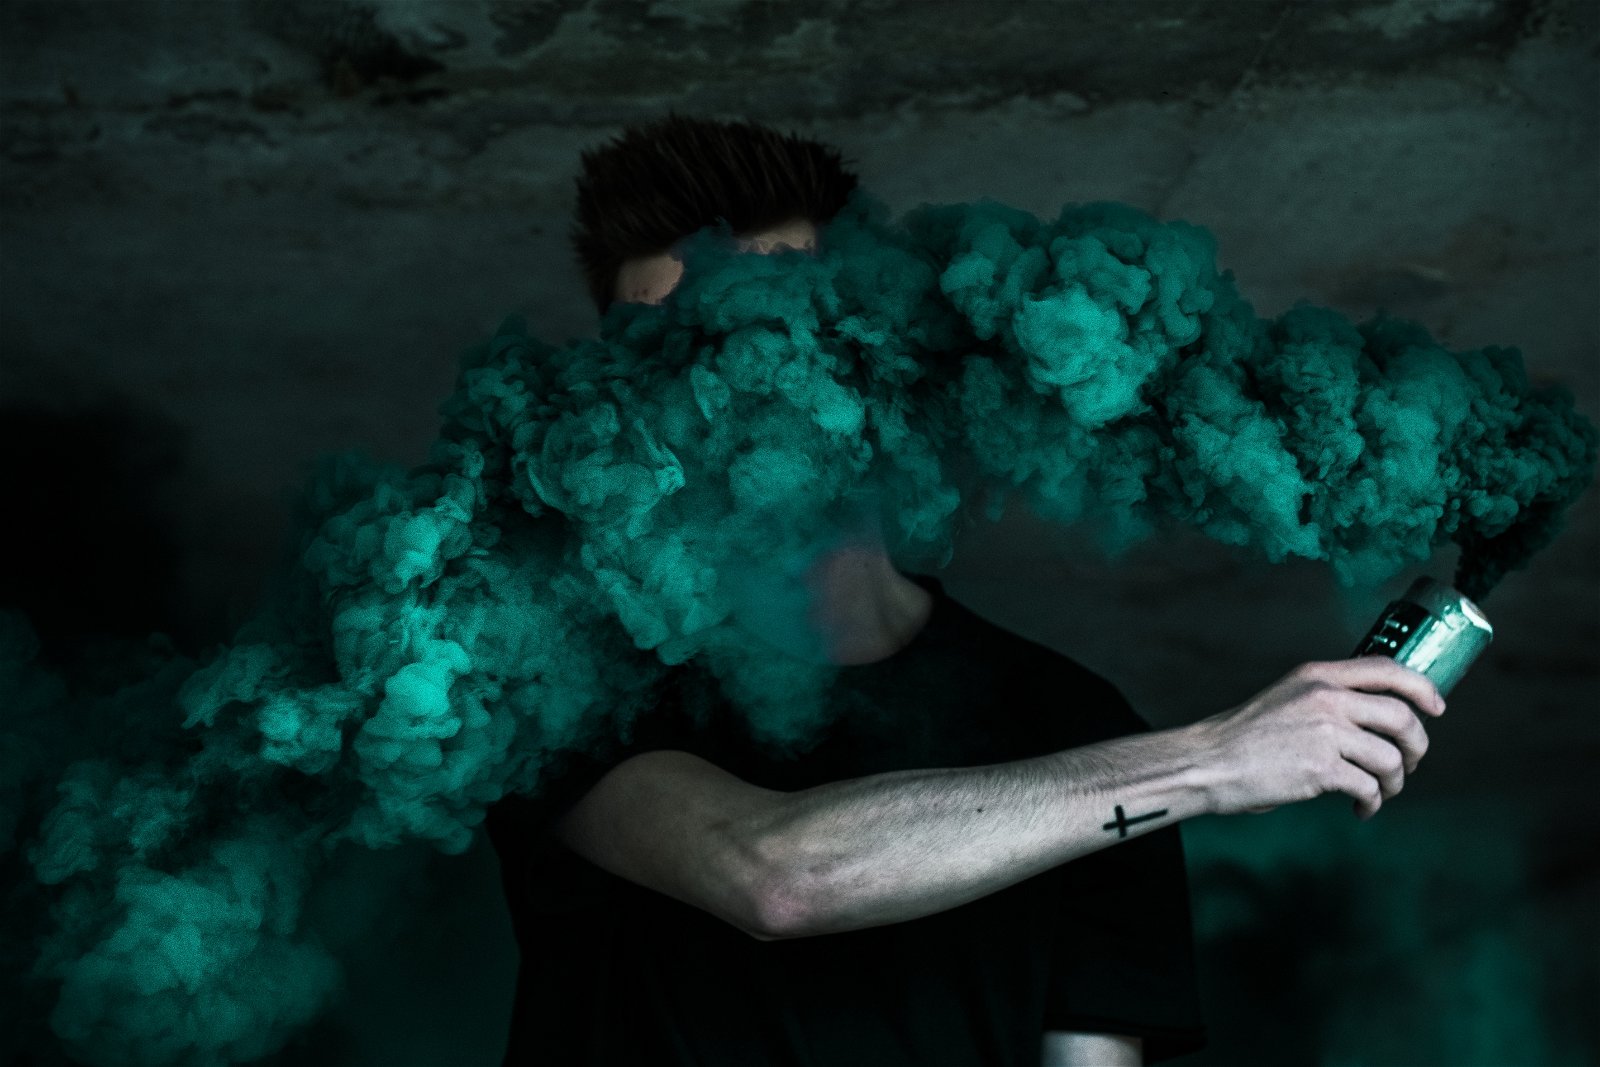 creative smoke bomb photography